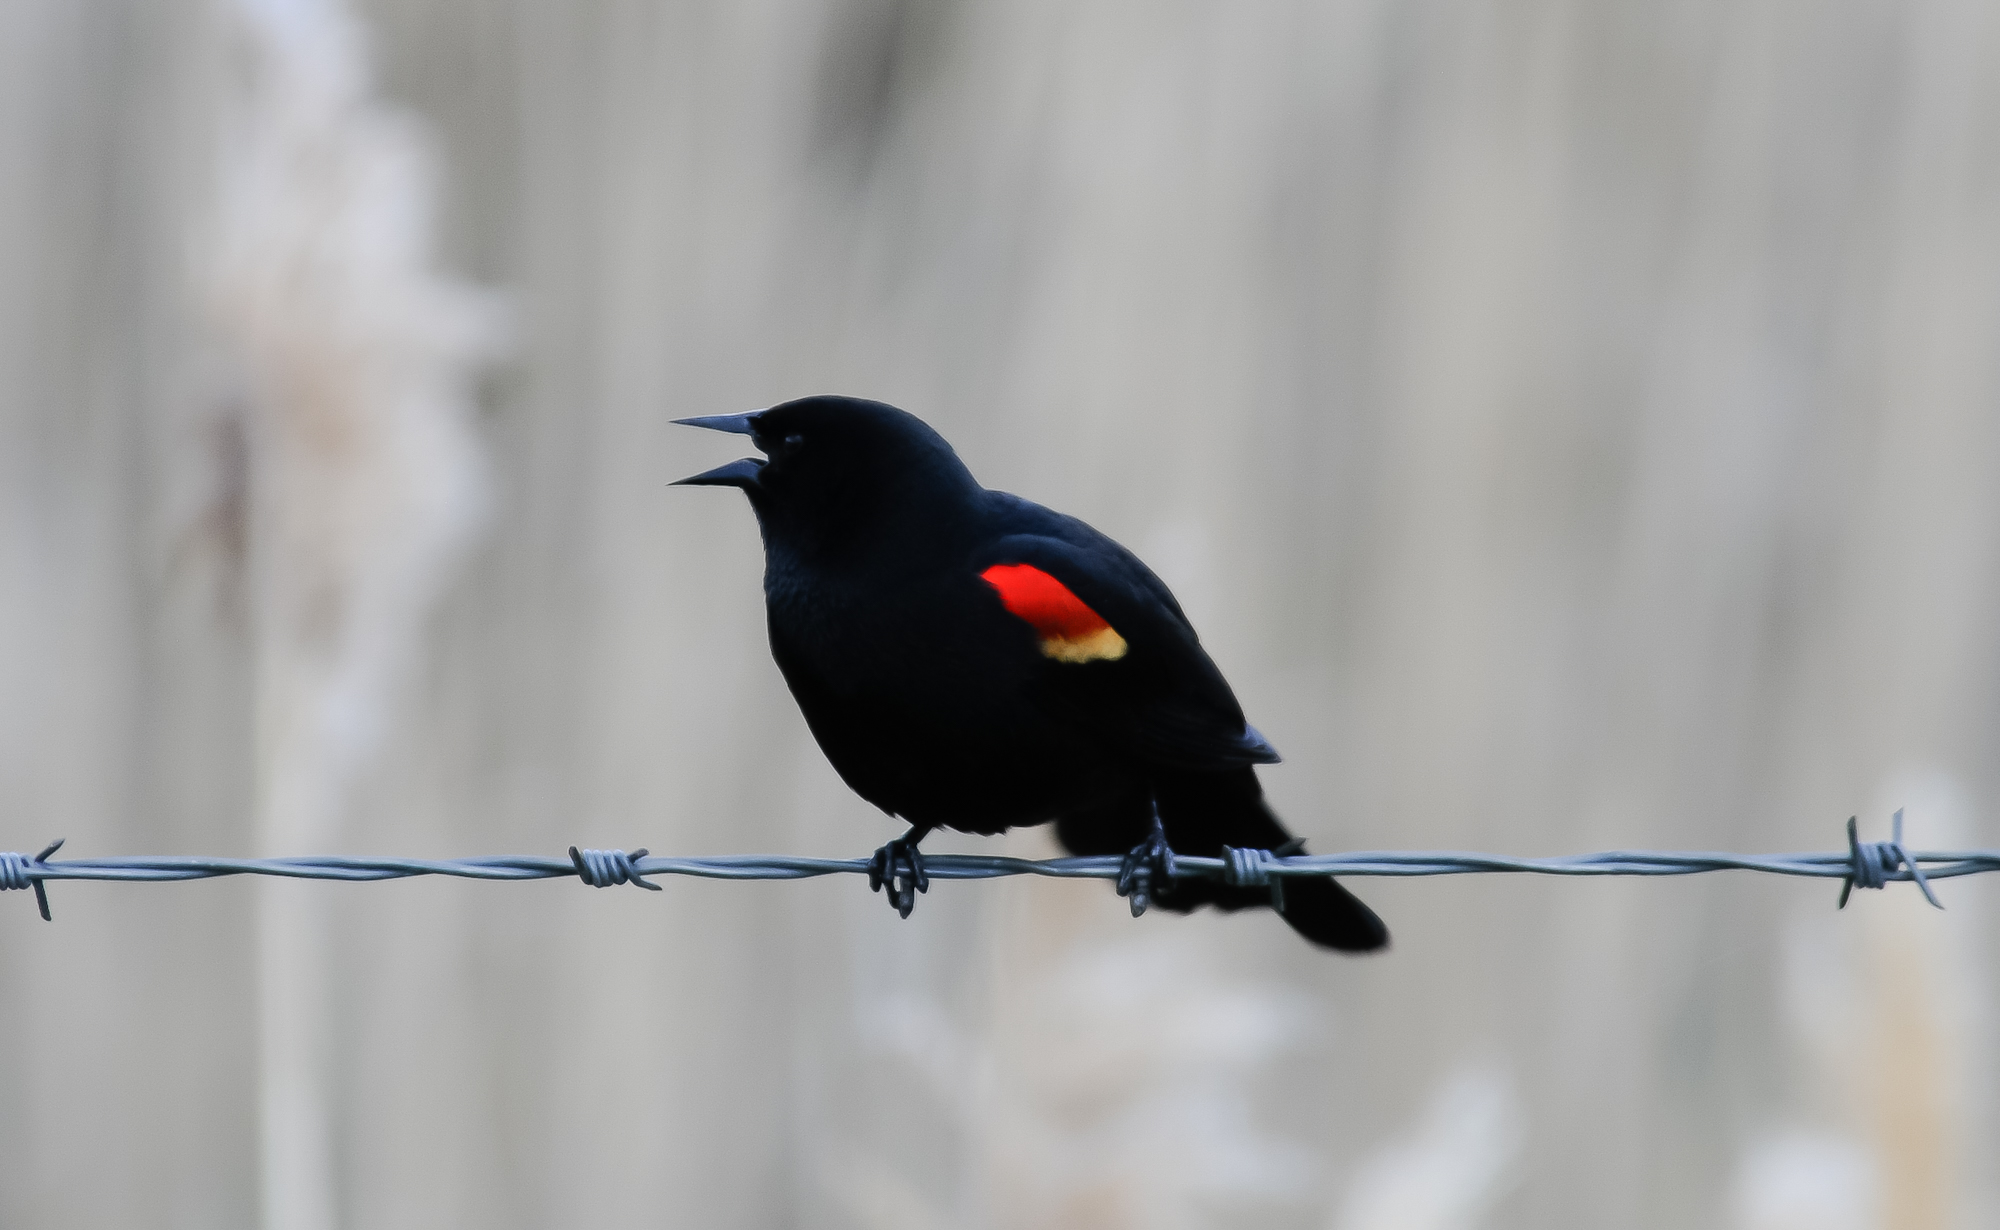 birdwatchers needed to count birds like this red-winged blackbird in Utah...